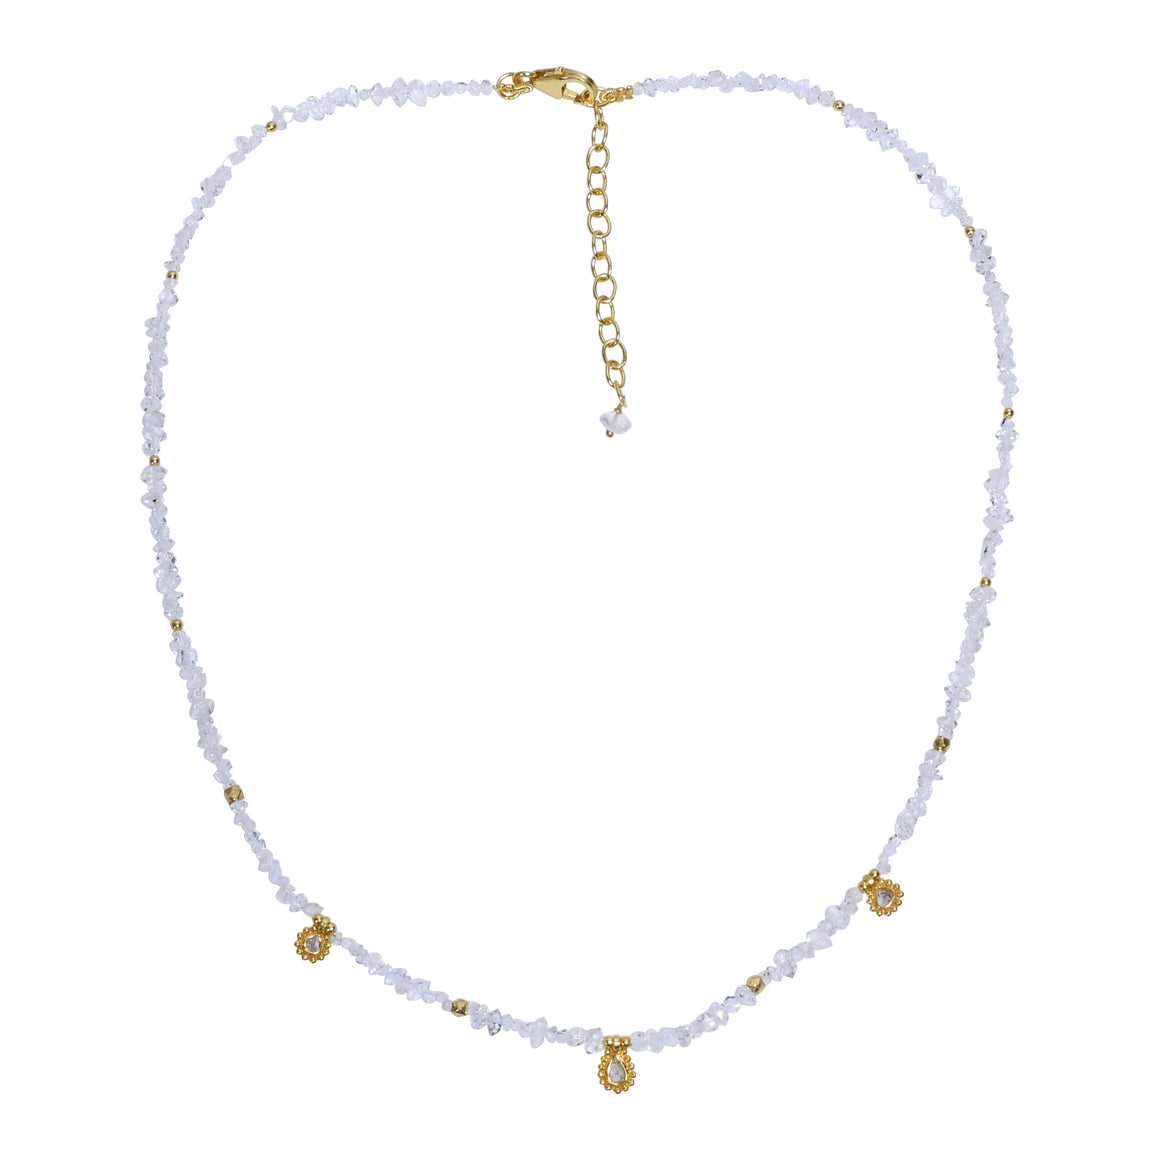 Faceted Herkimer Diamond Beads with Polki Diamonds